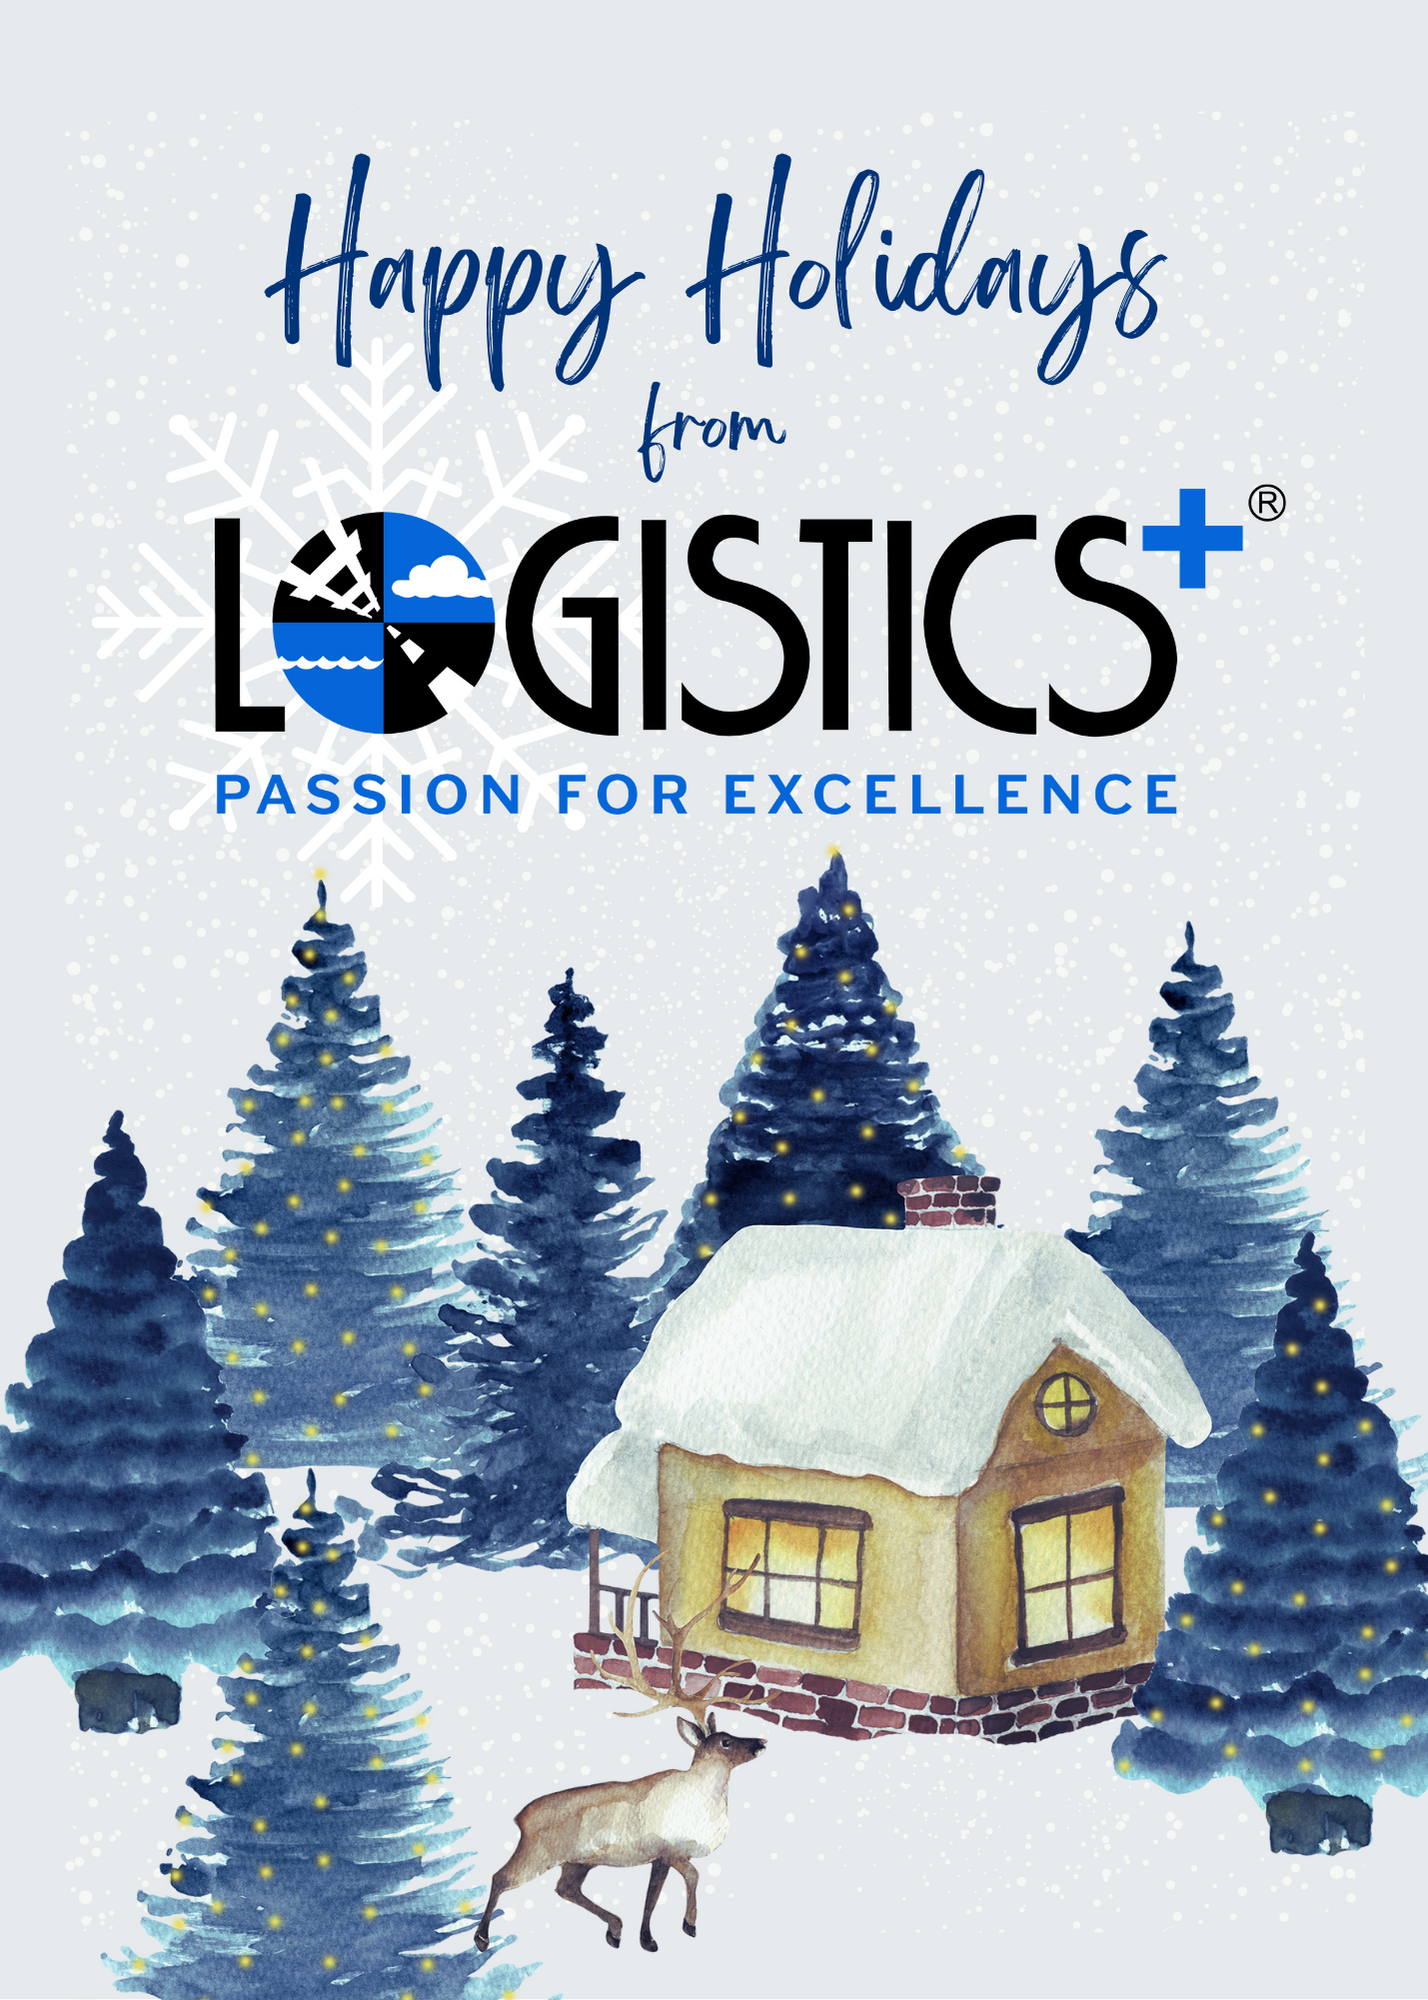 Logistics Plus Wishes You A Happy Holiday Season!